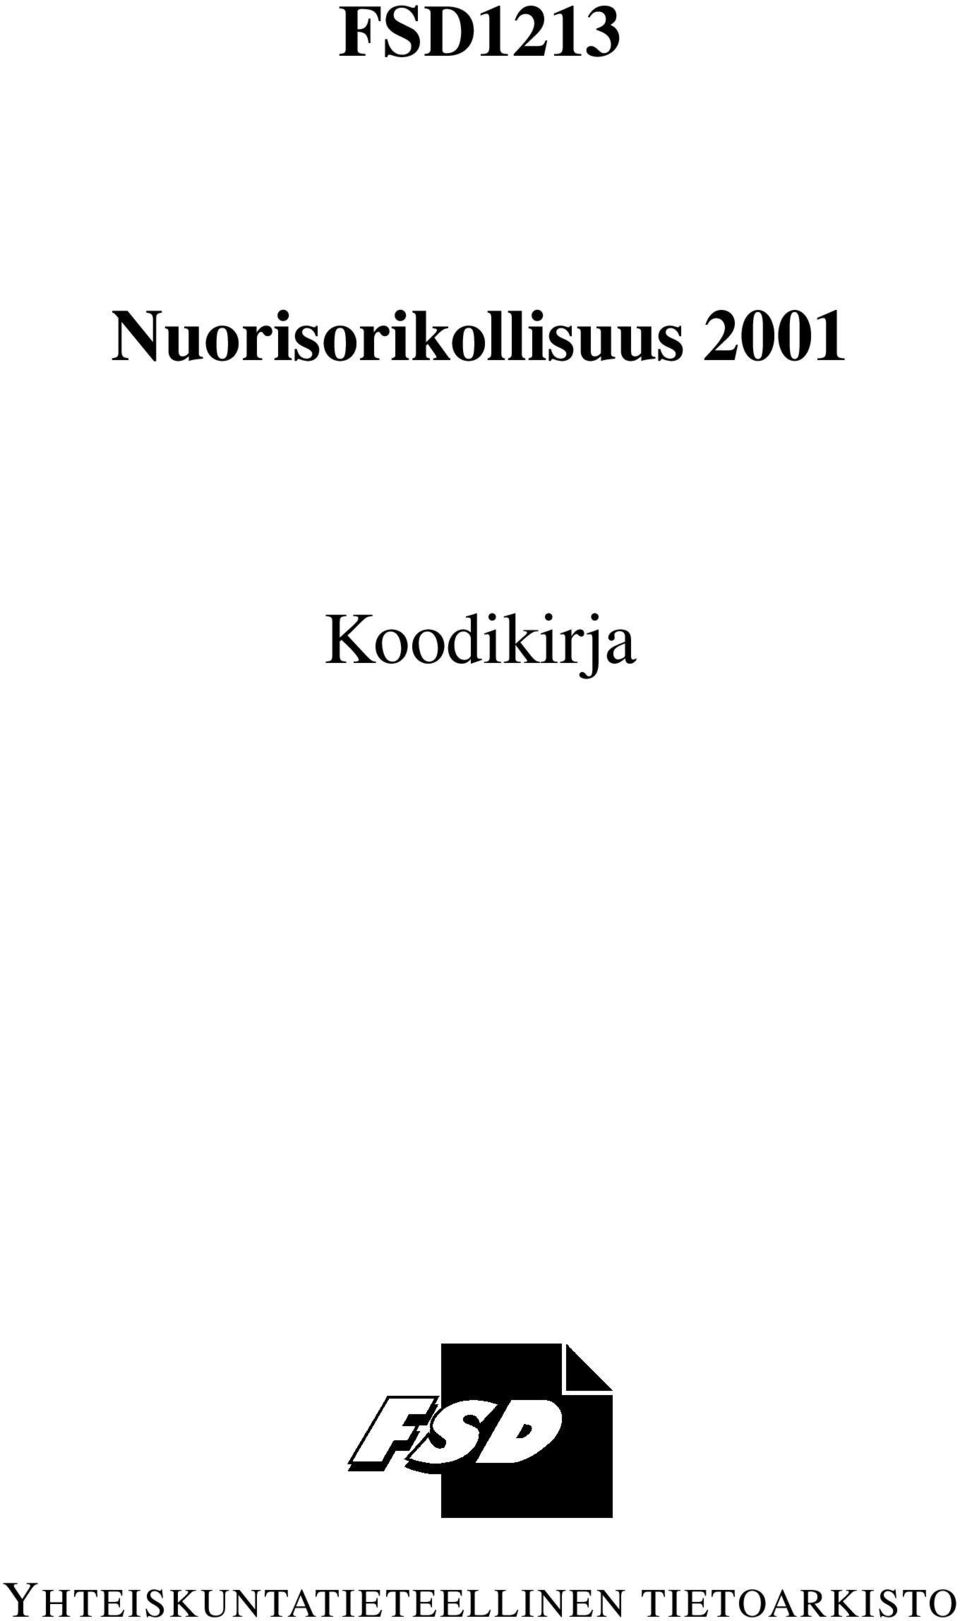 2001 Koodikirja